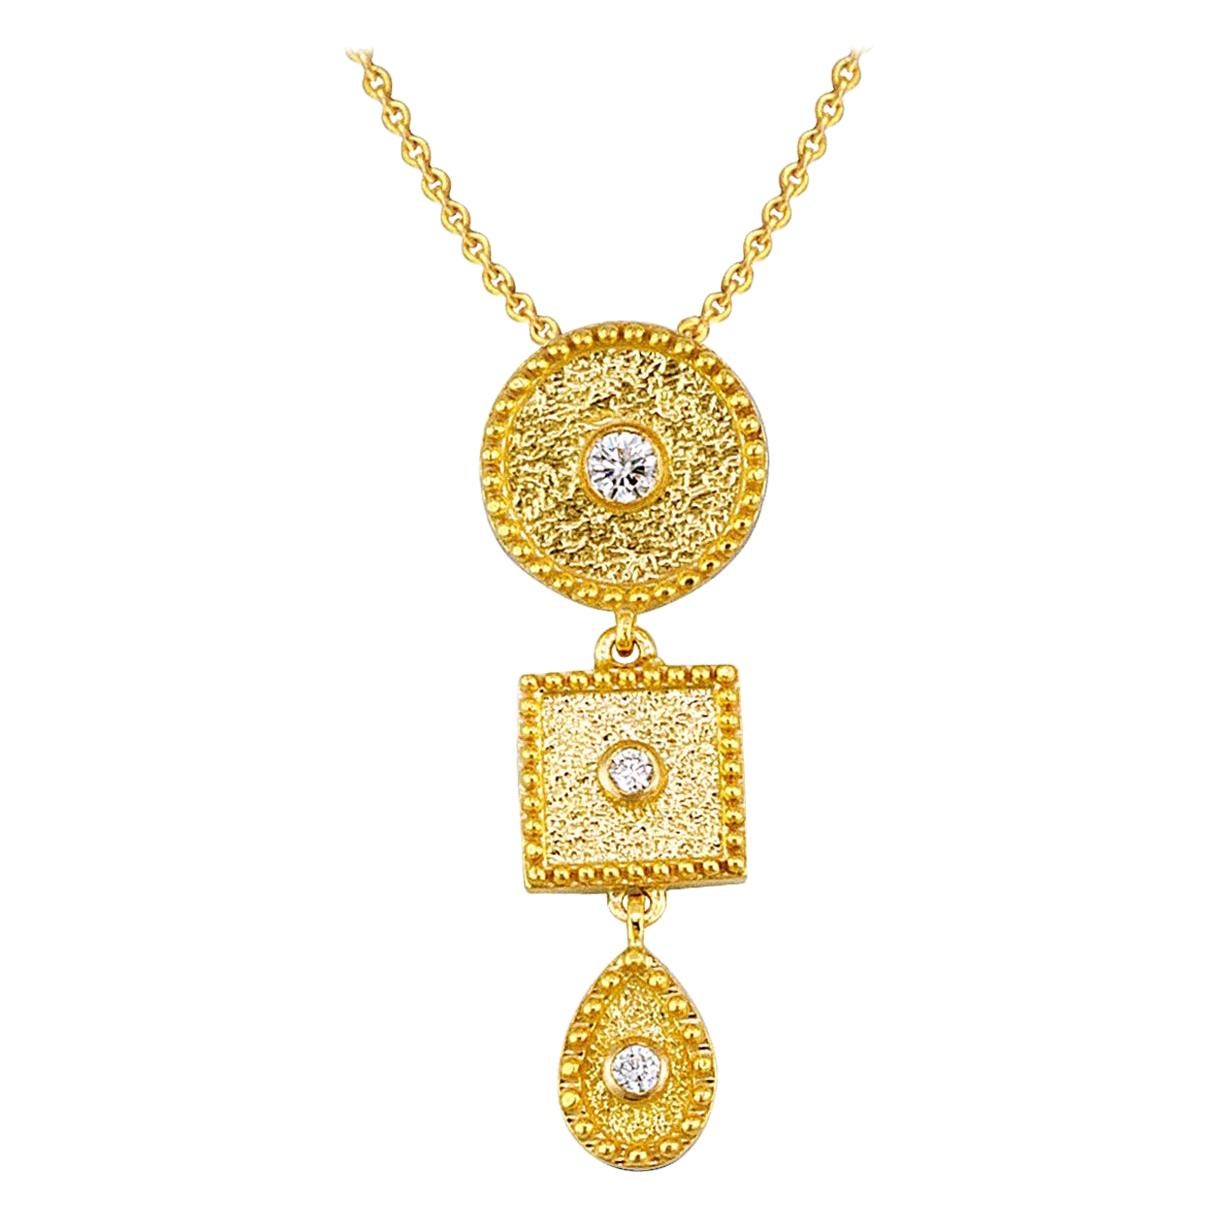 Georgios Collection 18 Karat Yellow Gold Diamond Pendant with Granulation Work For Sale